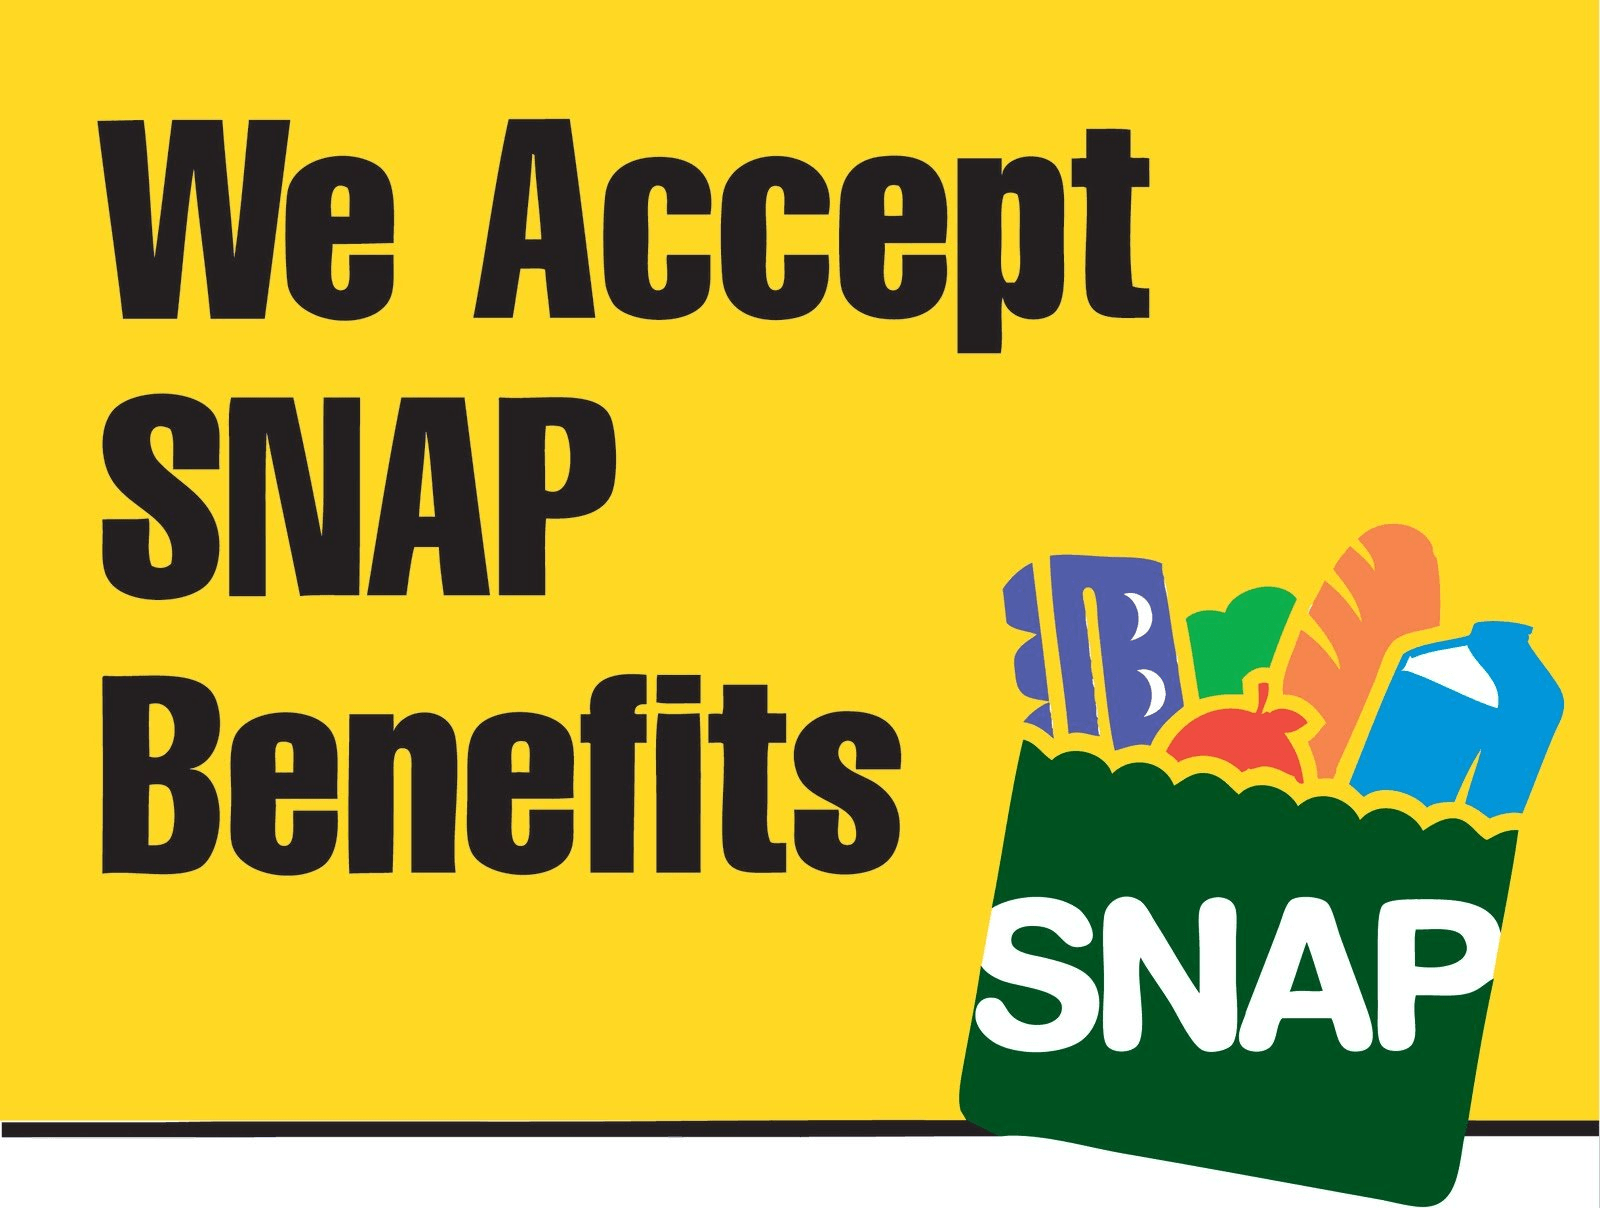 SNAP Benefits